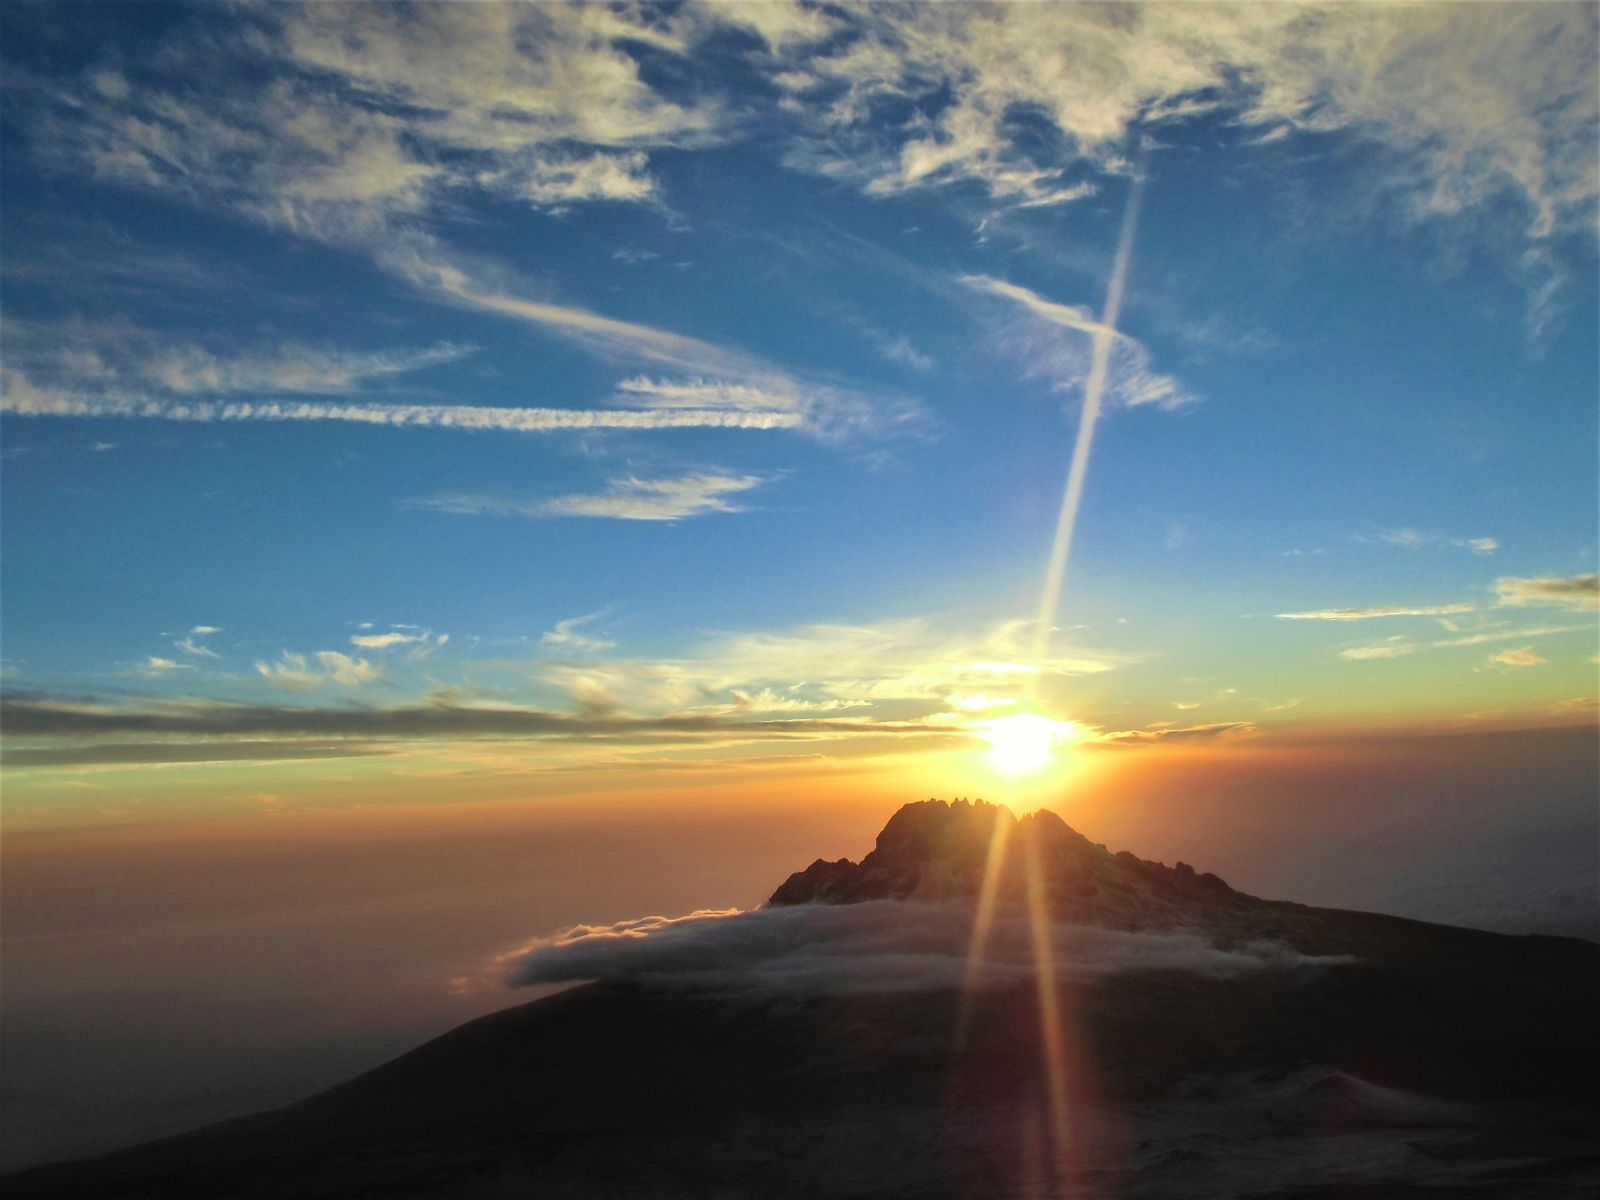 Sunrise at the summit of Mount Kilimanjaro in Tanzania